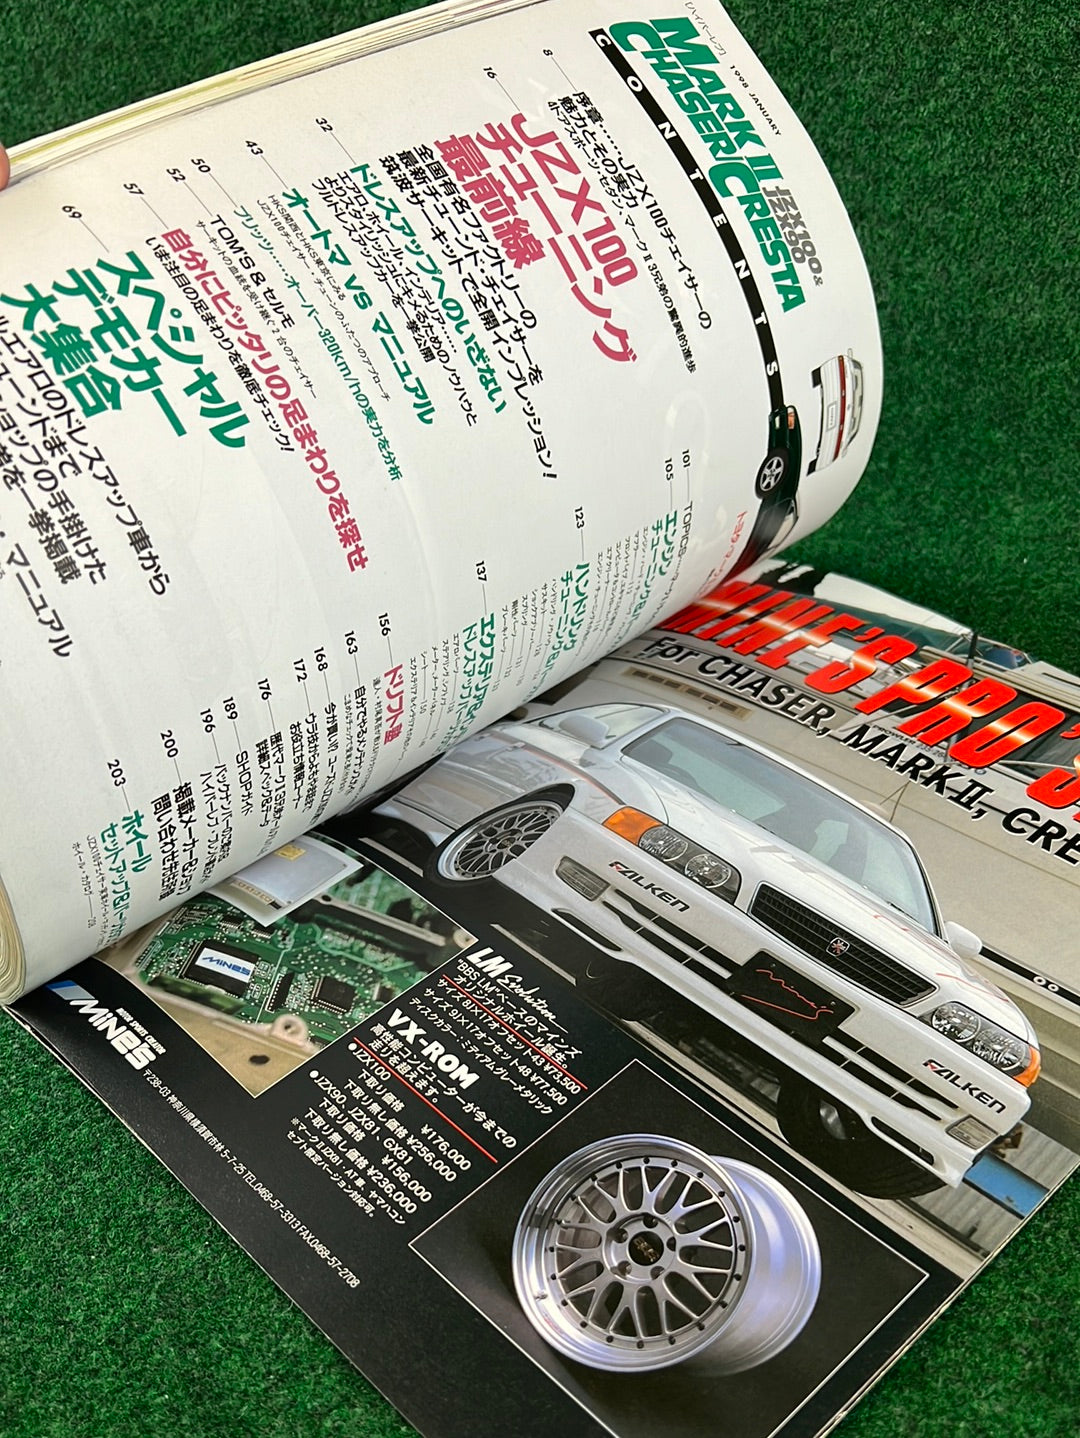 Hyper Rev Magazine - Toyota Mark II, Chaser, Cresta JZX90 JZX100 - Vol.26